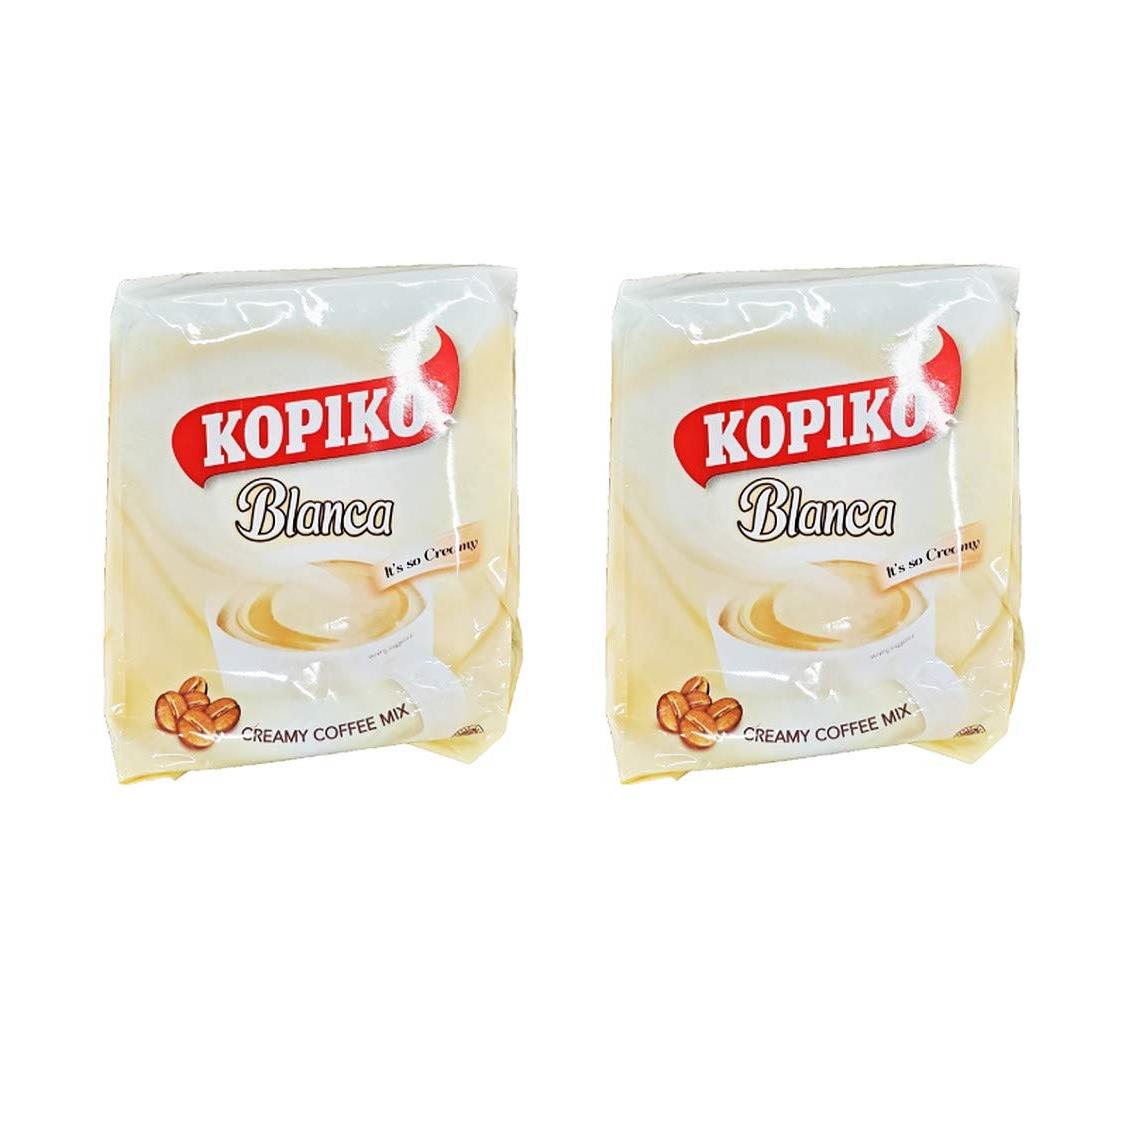 Kopiko Blanca Creamy Coffee Mix (2 Pack, Total of 600g)